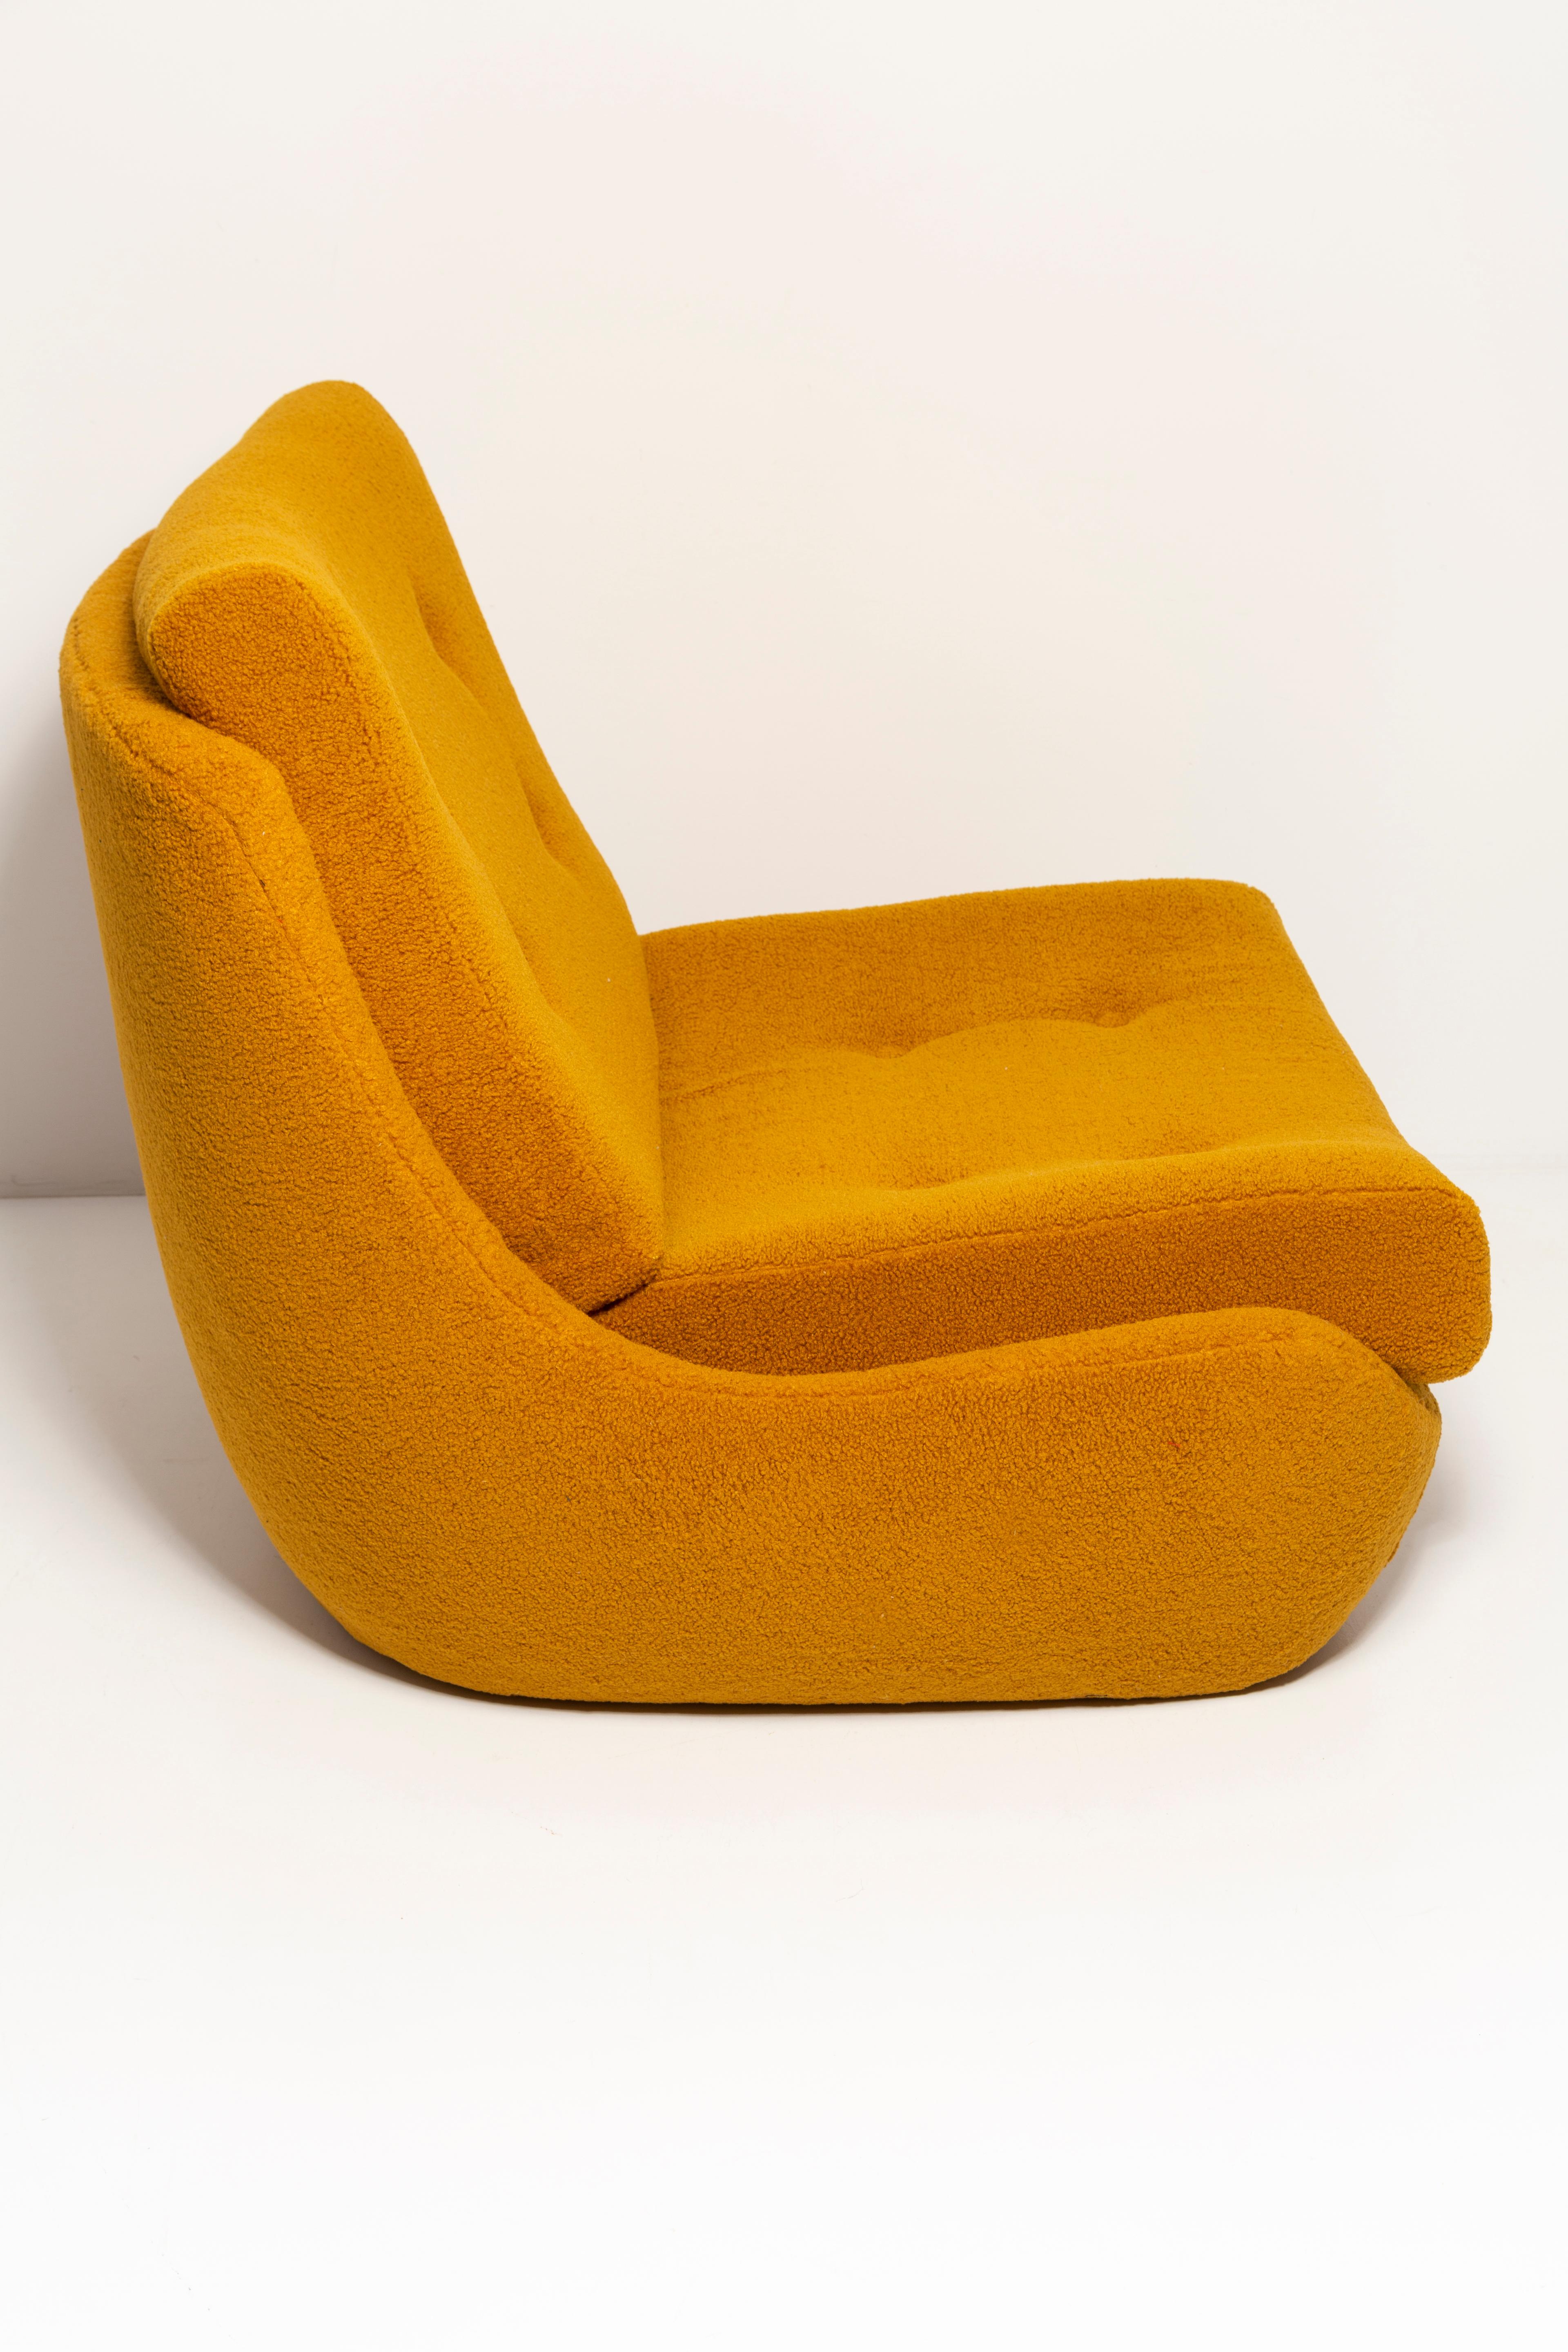 Mid-Century Modern 20th Century Vintage Ochre Yellow Boucle Atlantis Big Armchair, 1960s For Sale